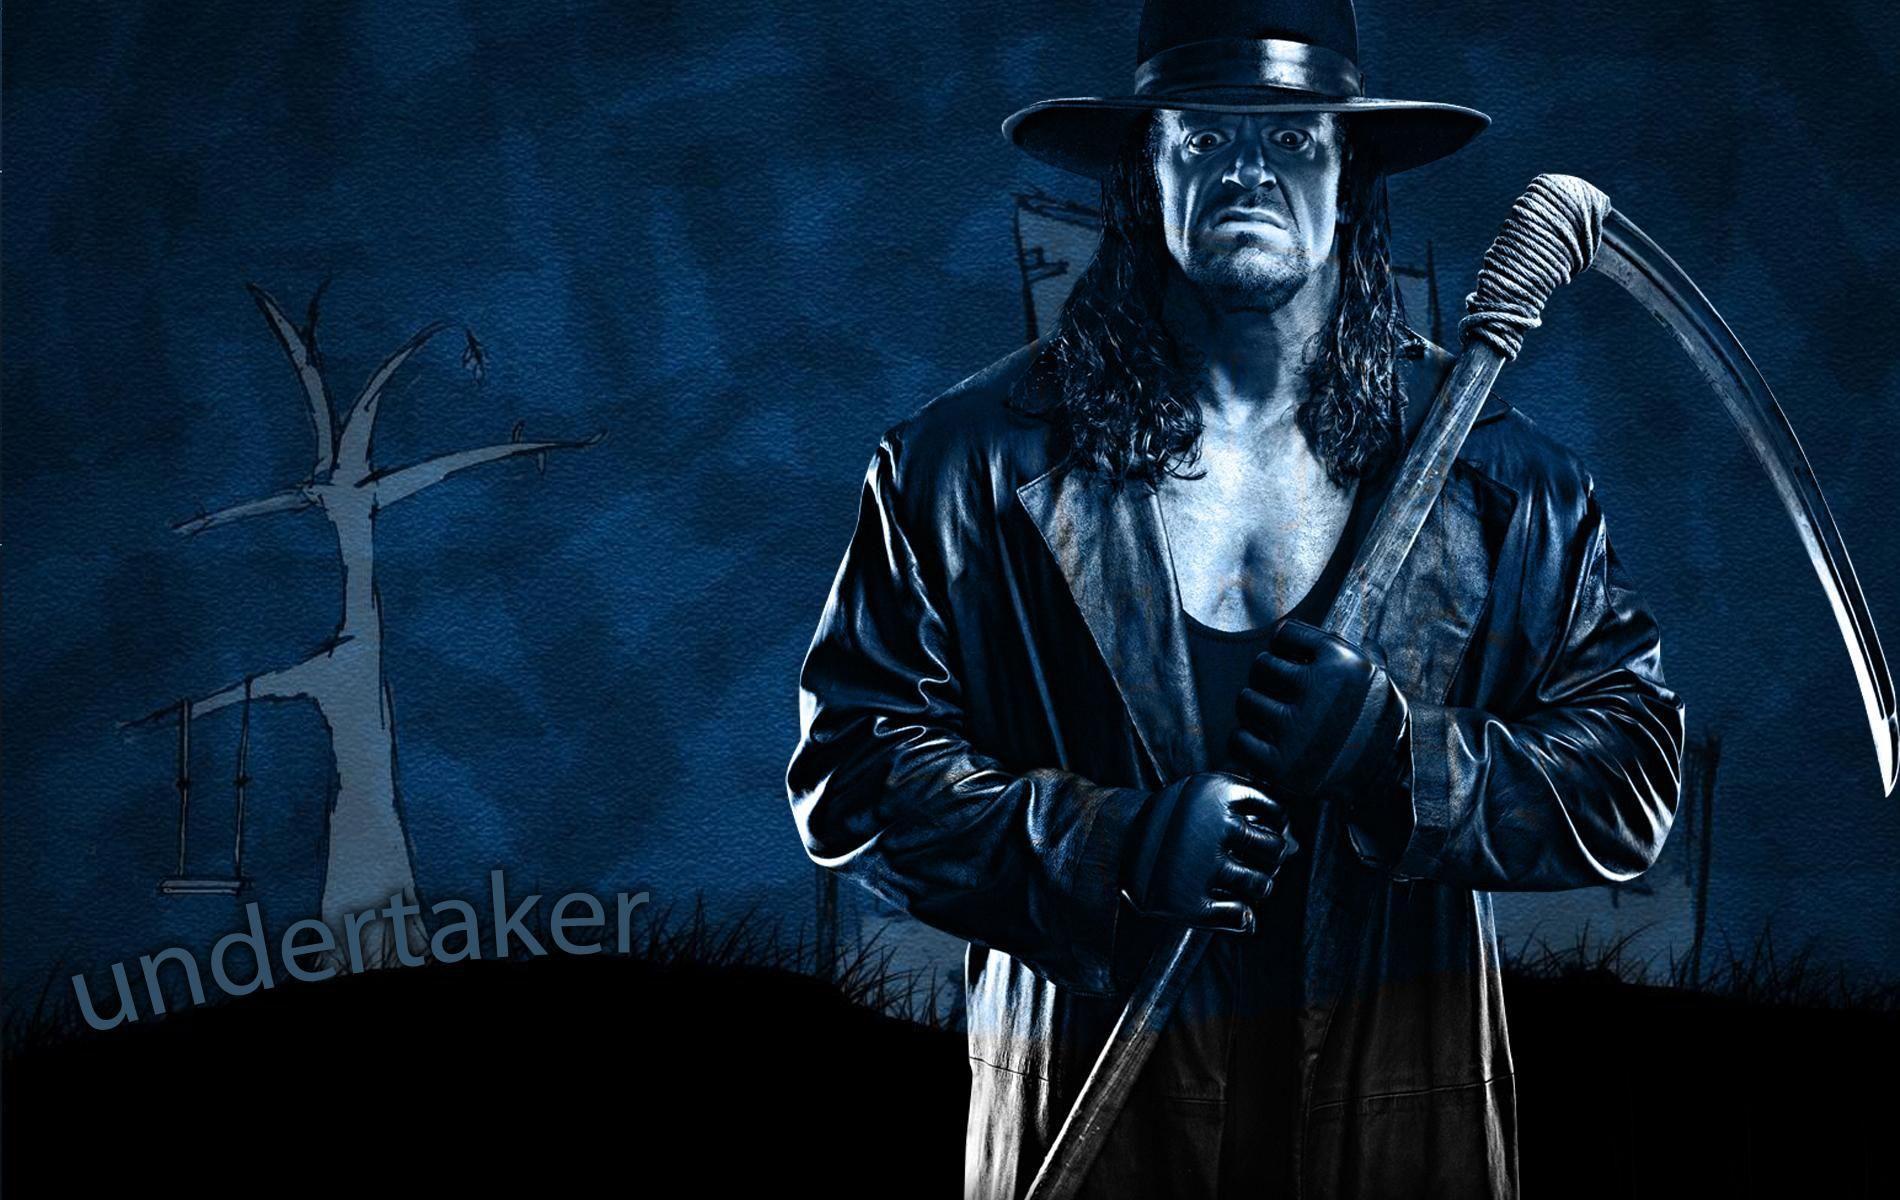 WWE Undertaker Wallpaper  a cool Wallpaper of the Undertake  Flickr